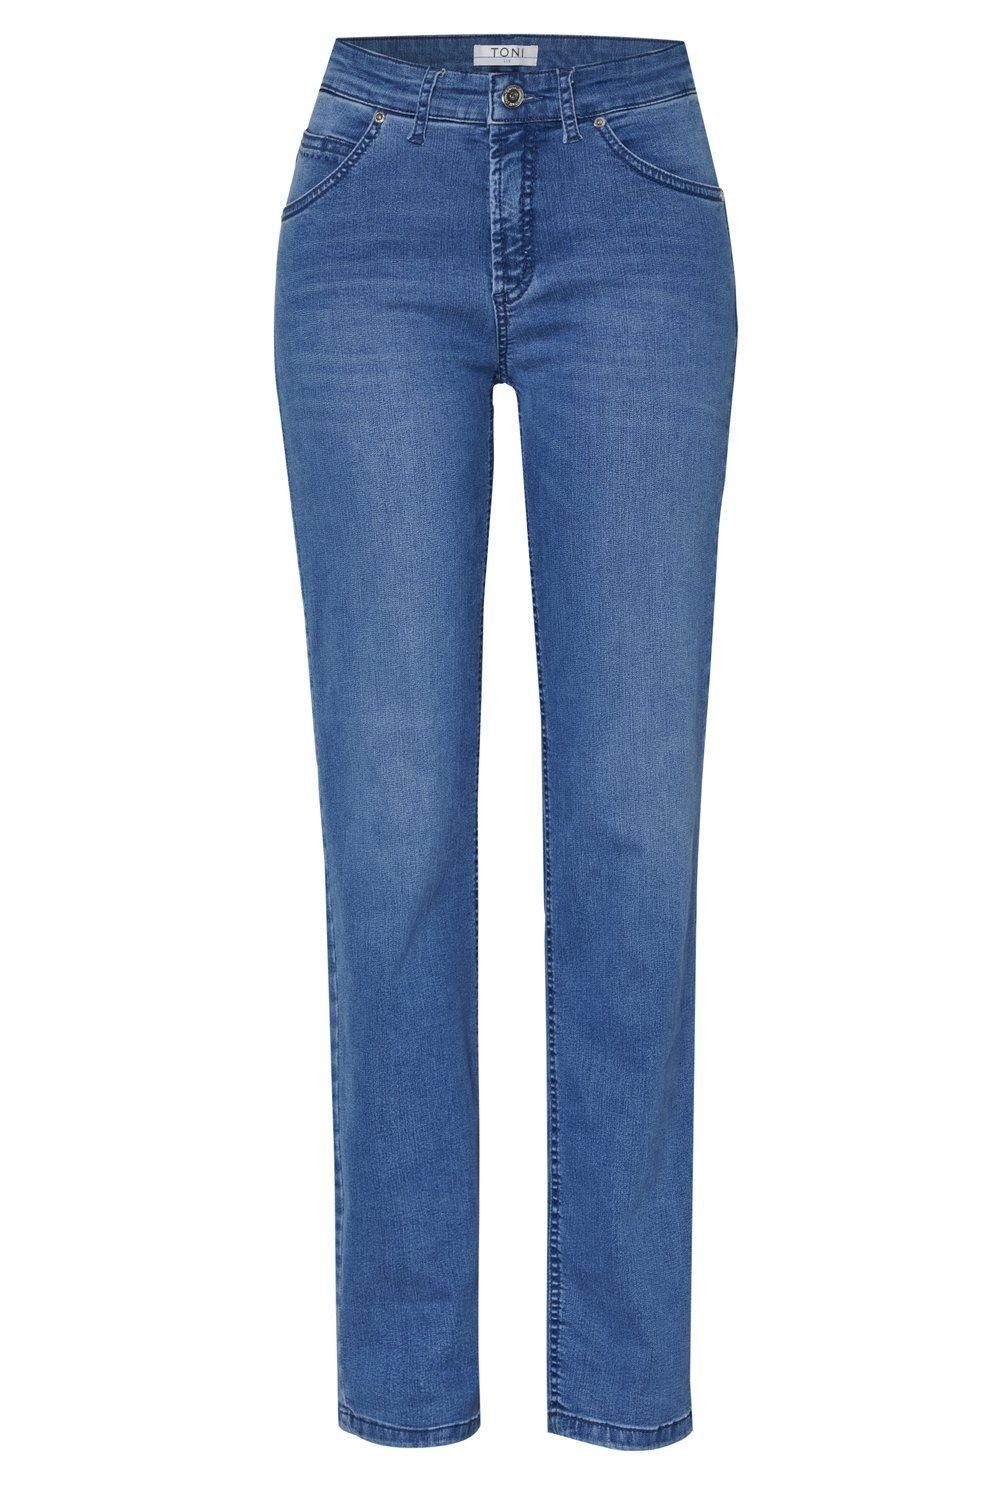 TONI 5-Pocket-Jeans blue bleached